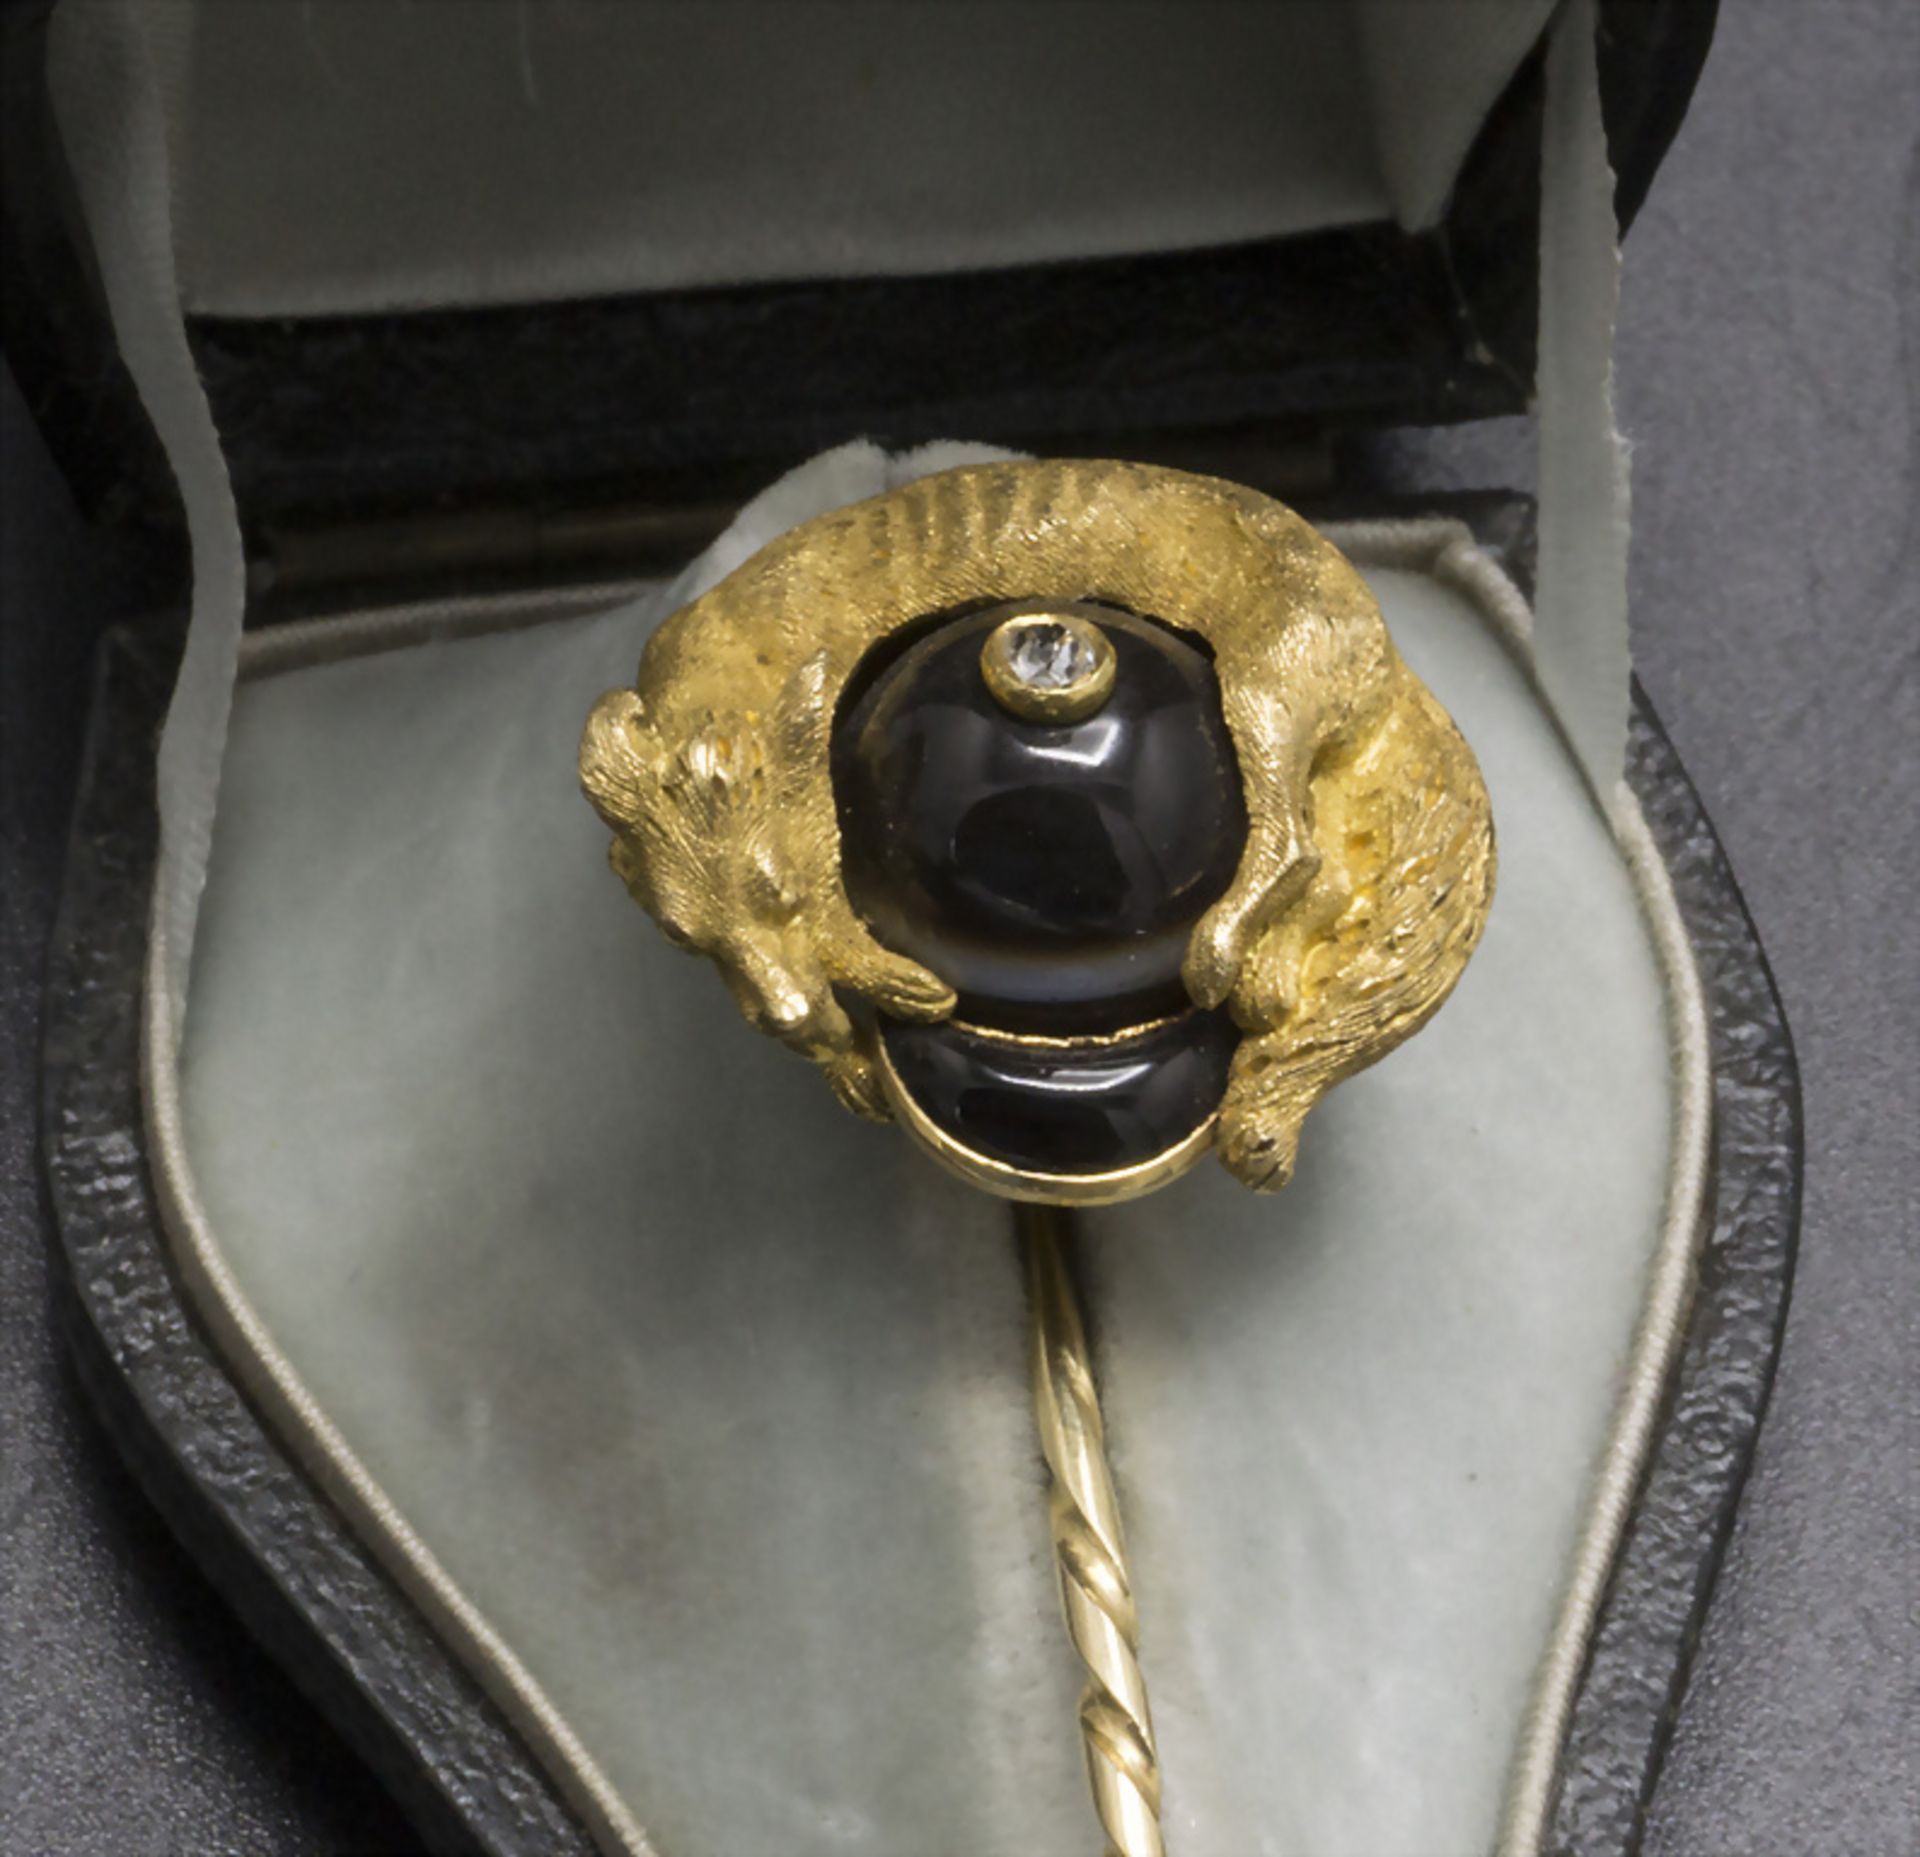 Anstecknadel mit Fuchs und Jäger-Helm / An 18k gold pin with fox and hunter helmet, um 1900